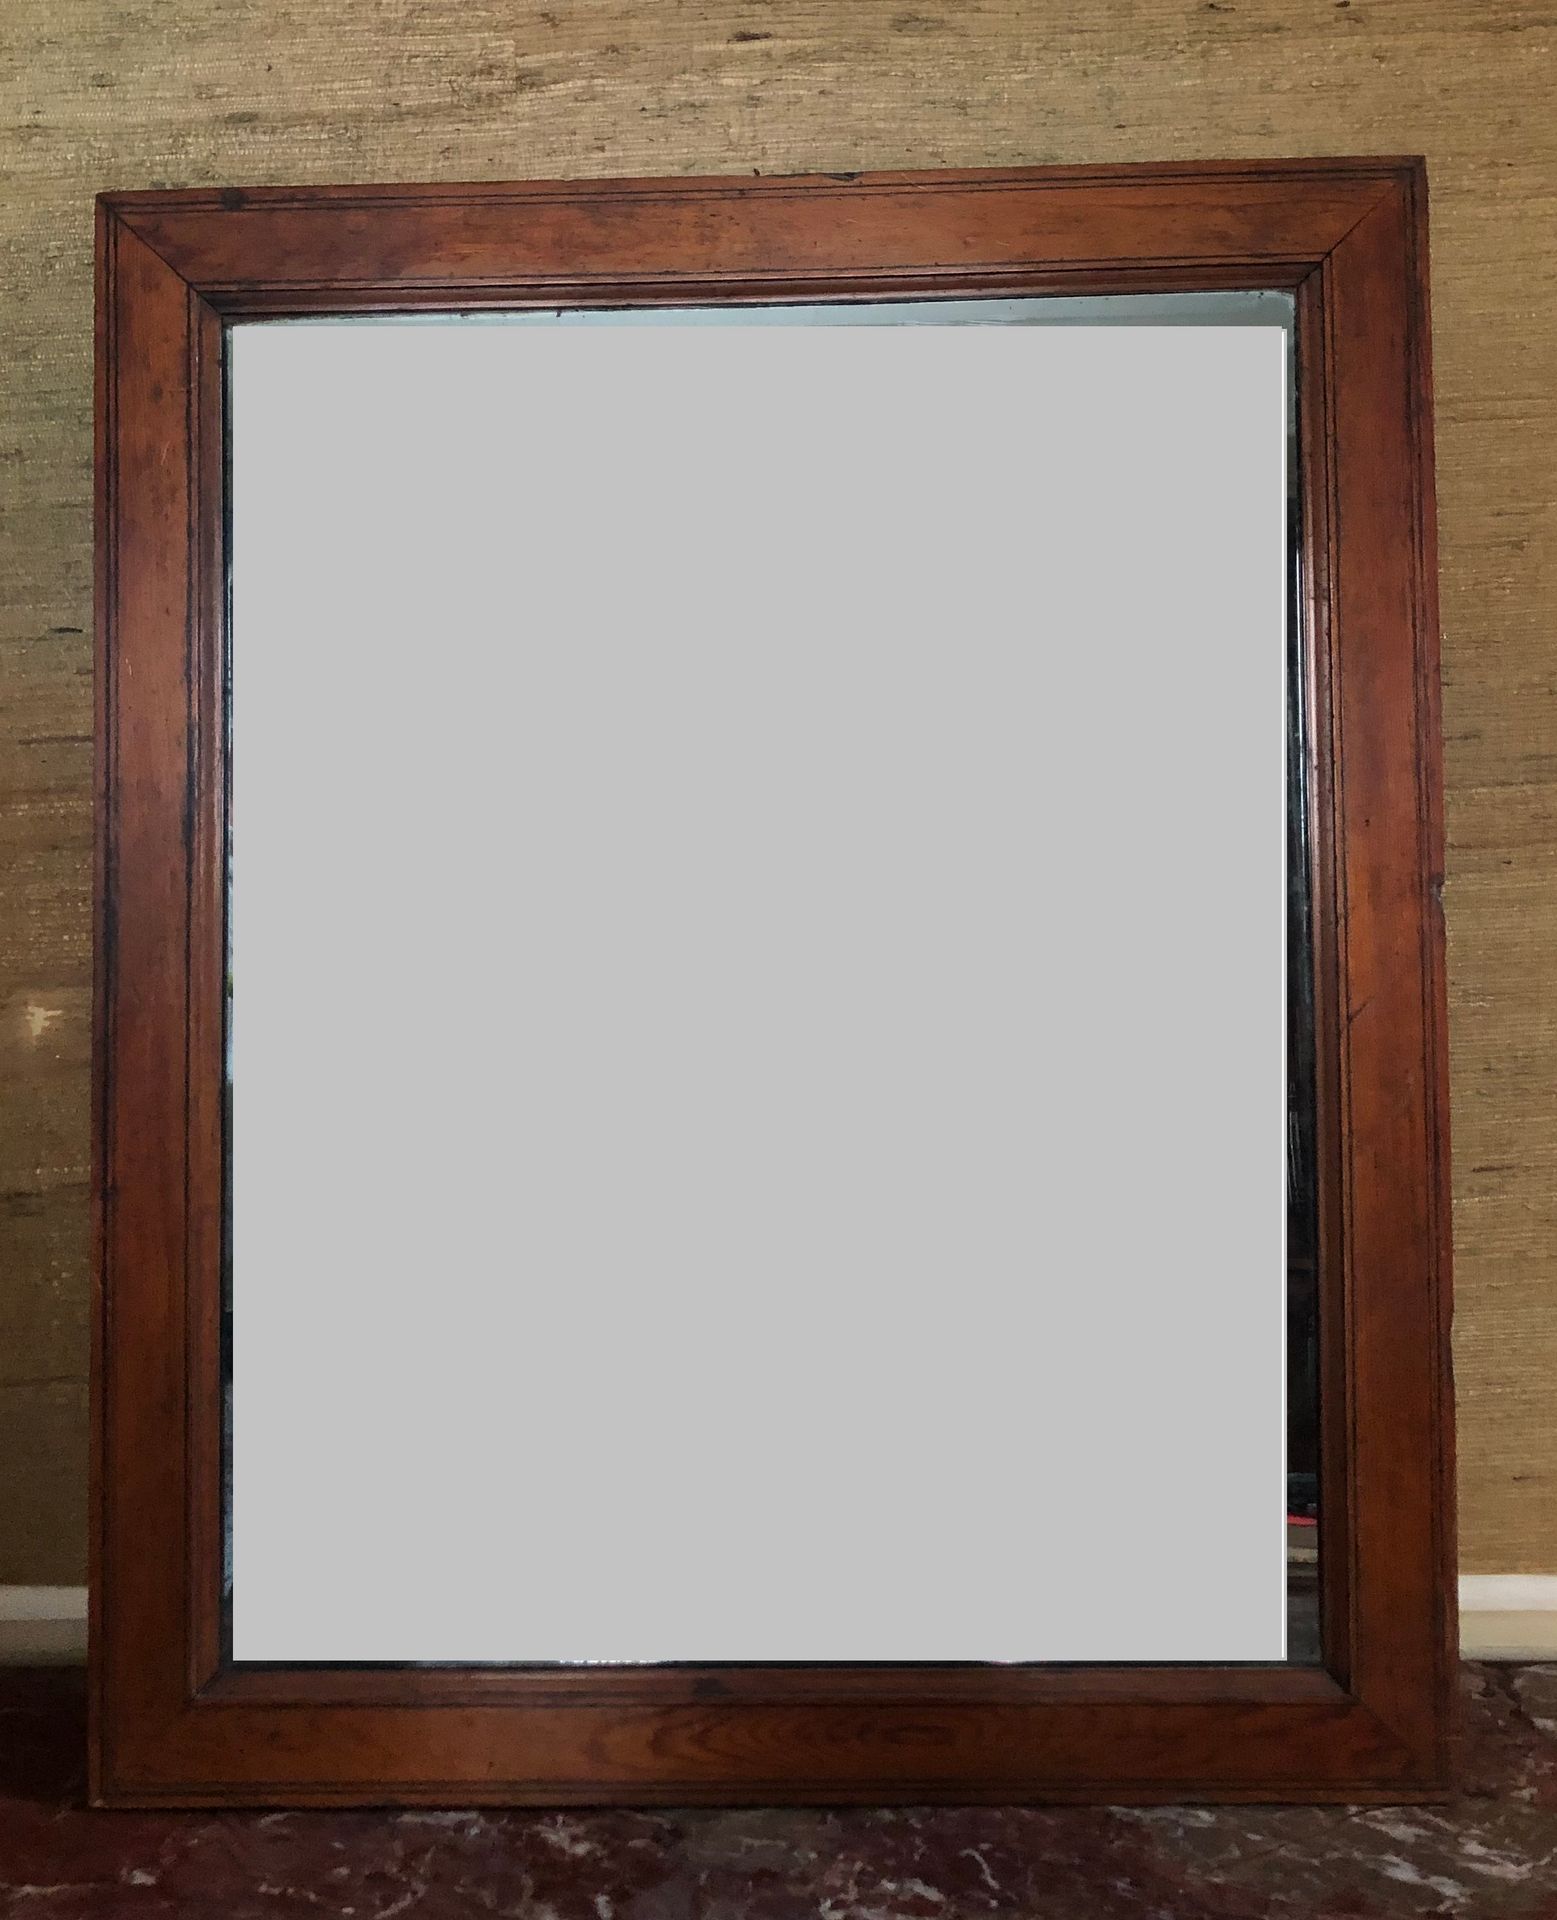 Null 套装包括一个Pitchwood镜子（80 x 66.5厘米）和一个桃花心木的COIFFEUSE桌面（58 x 47厘米）。